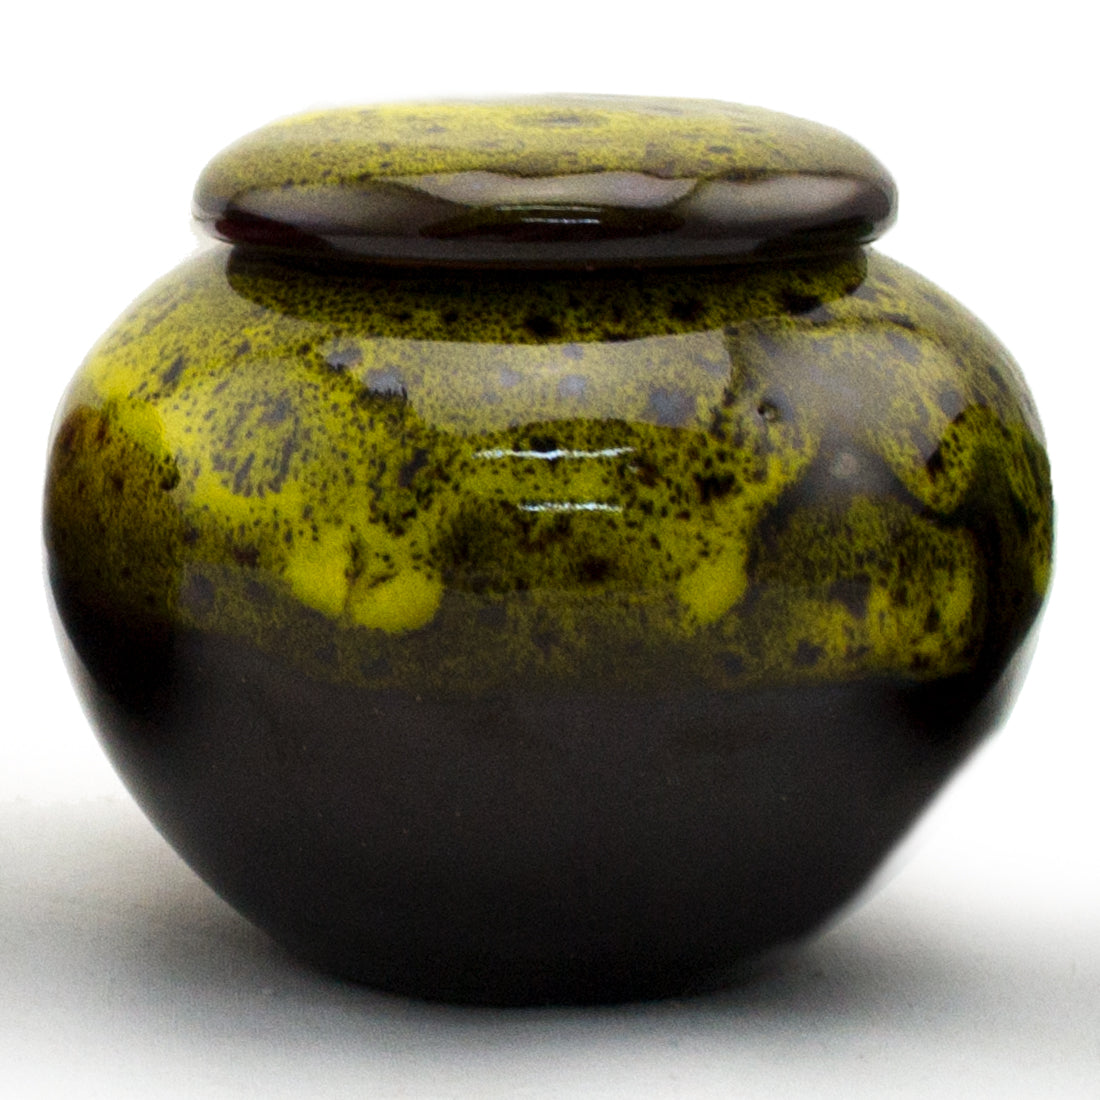 Tea Canister - Ceramic - Yellow - Original Source